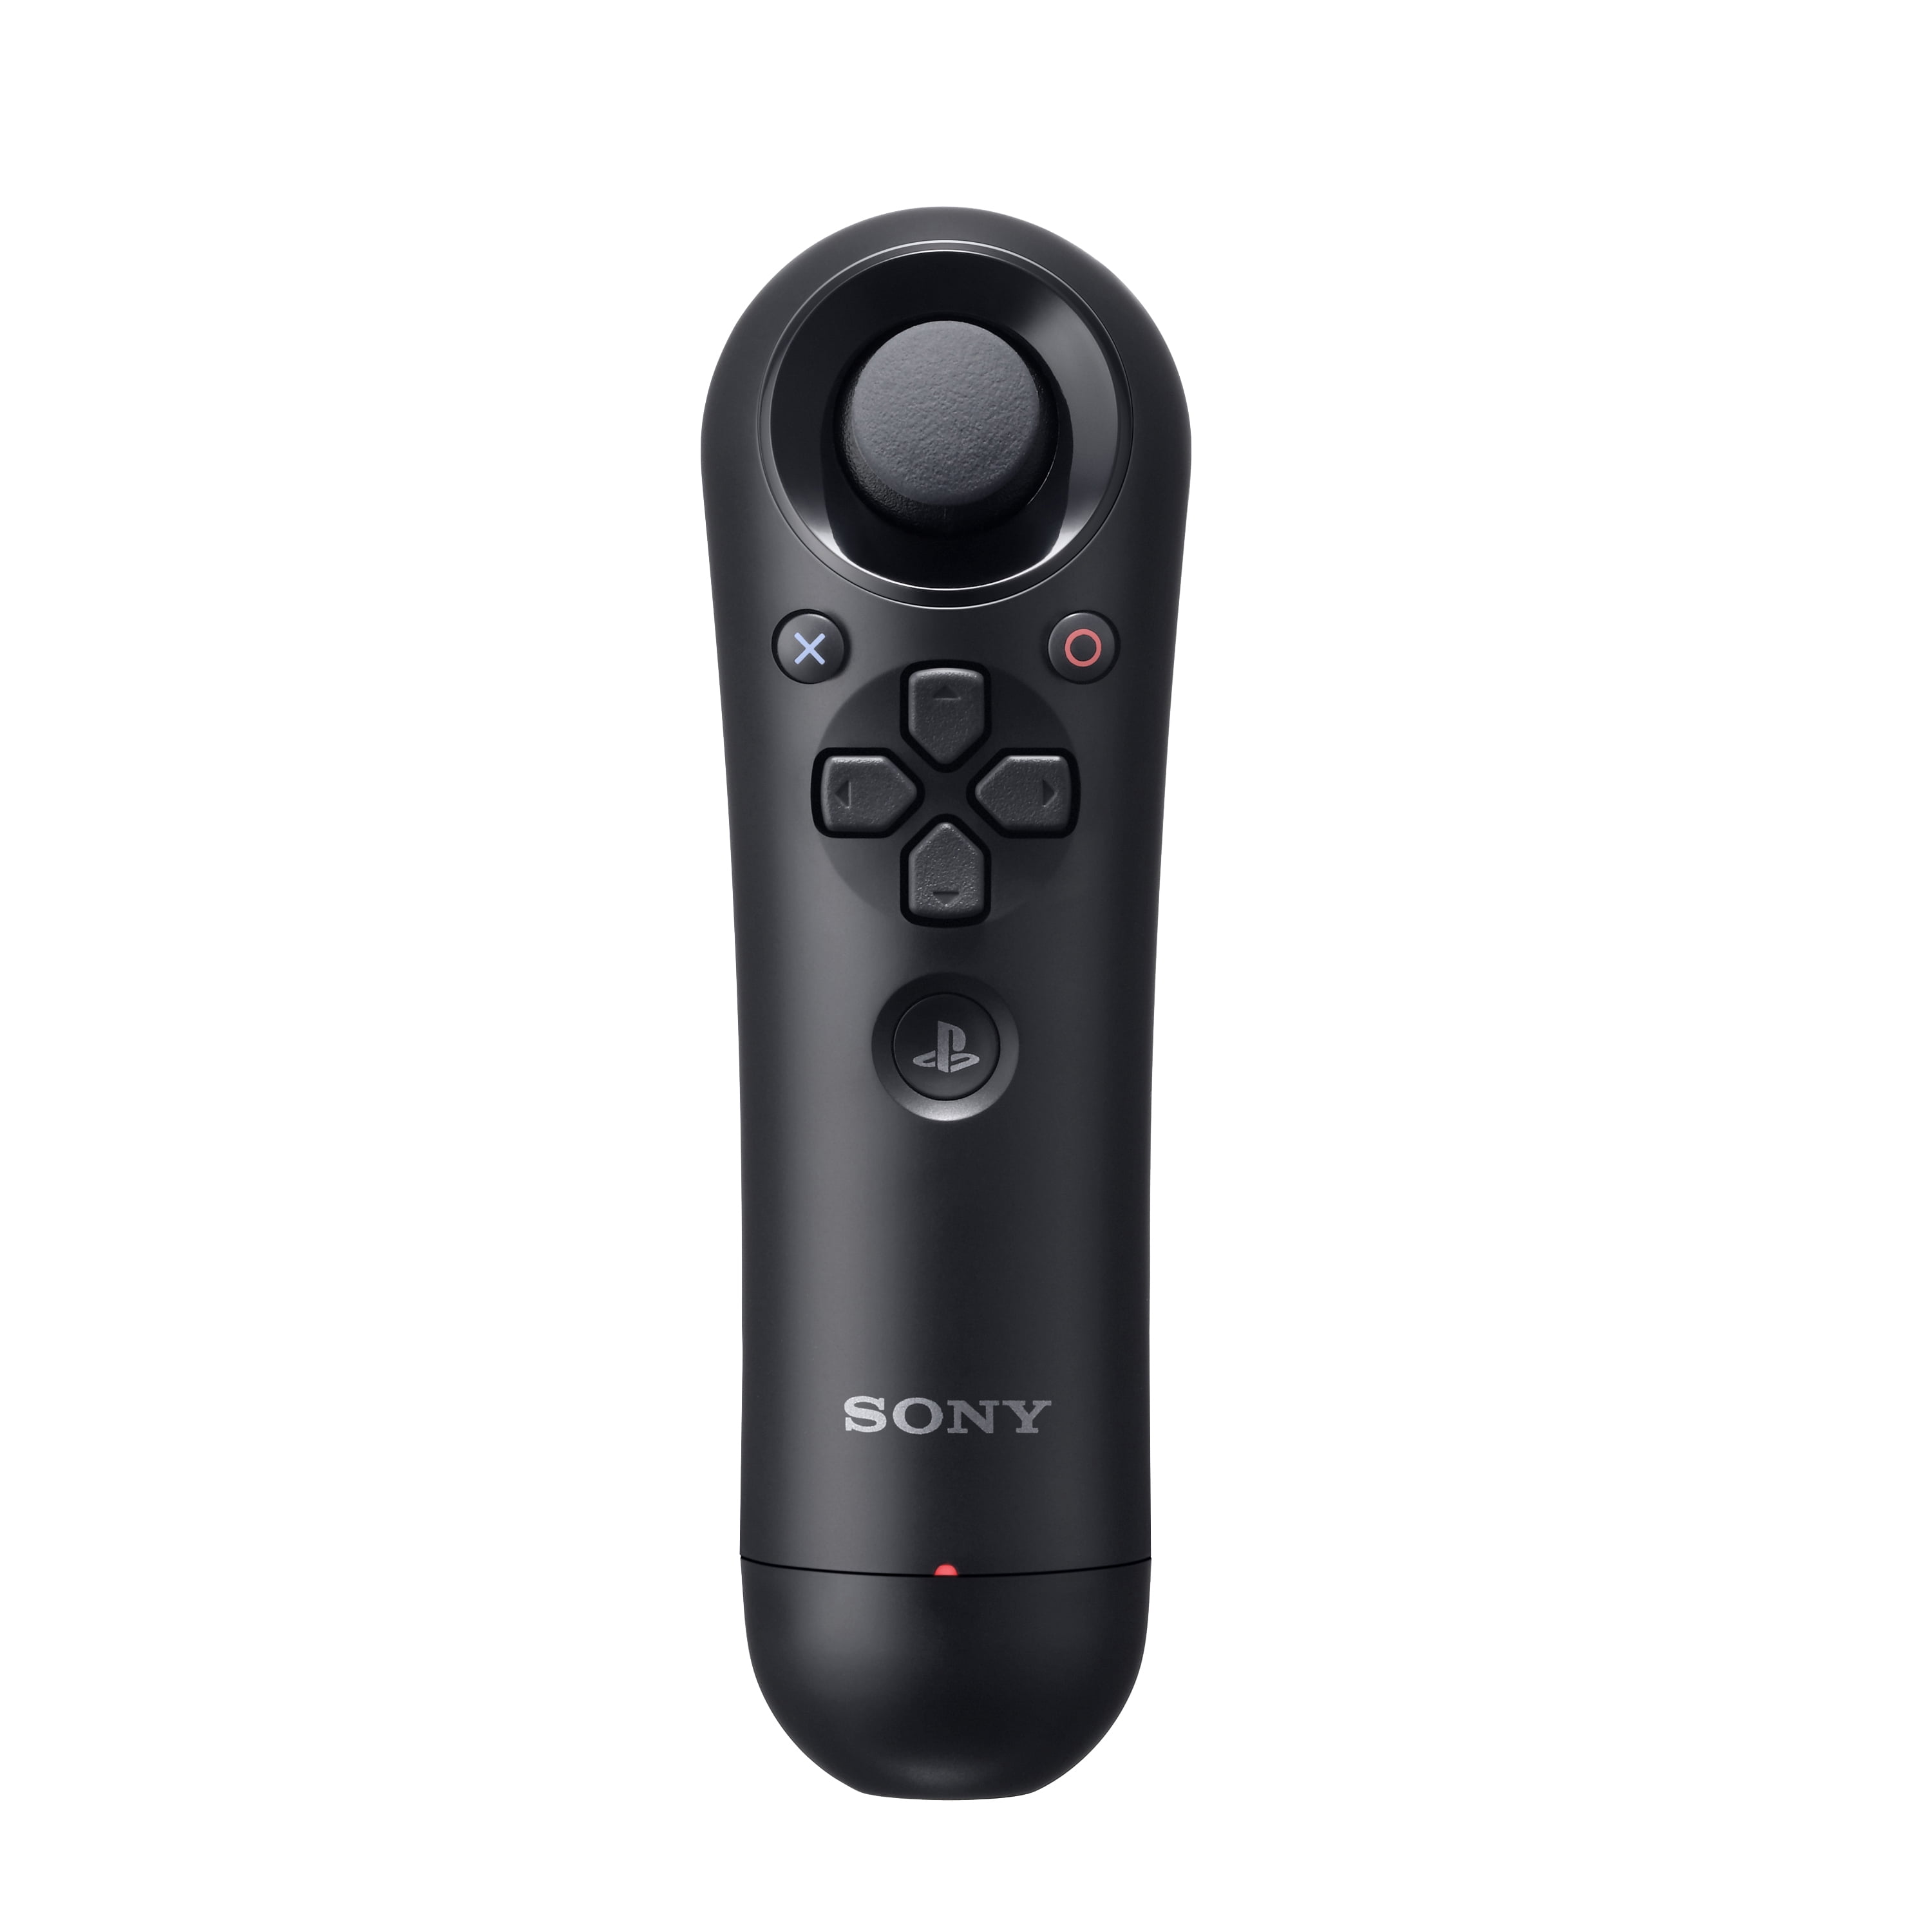 Пульт для стика. Контроллер Sony PLAYSTATION 3 move. Геймпад Sony move navigation Controller. Контроллер для Sony ps3. Sony ps4 move Motion Controller.